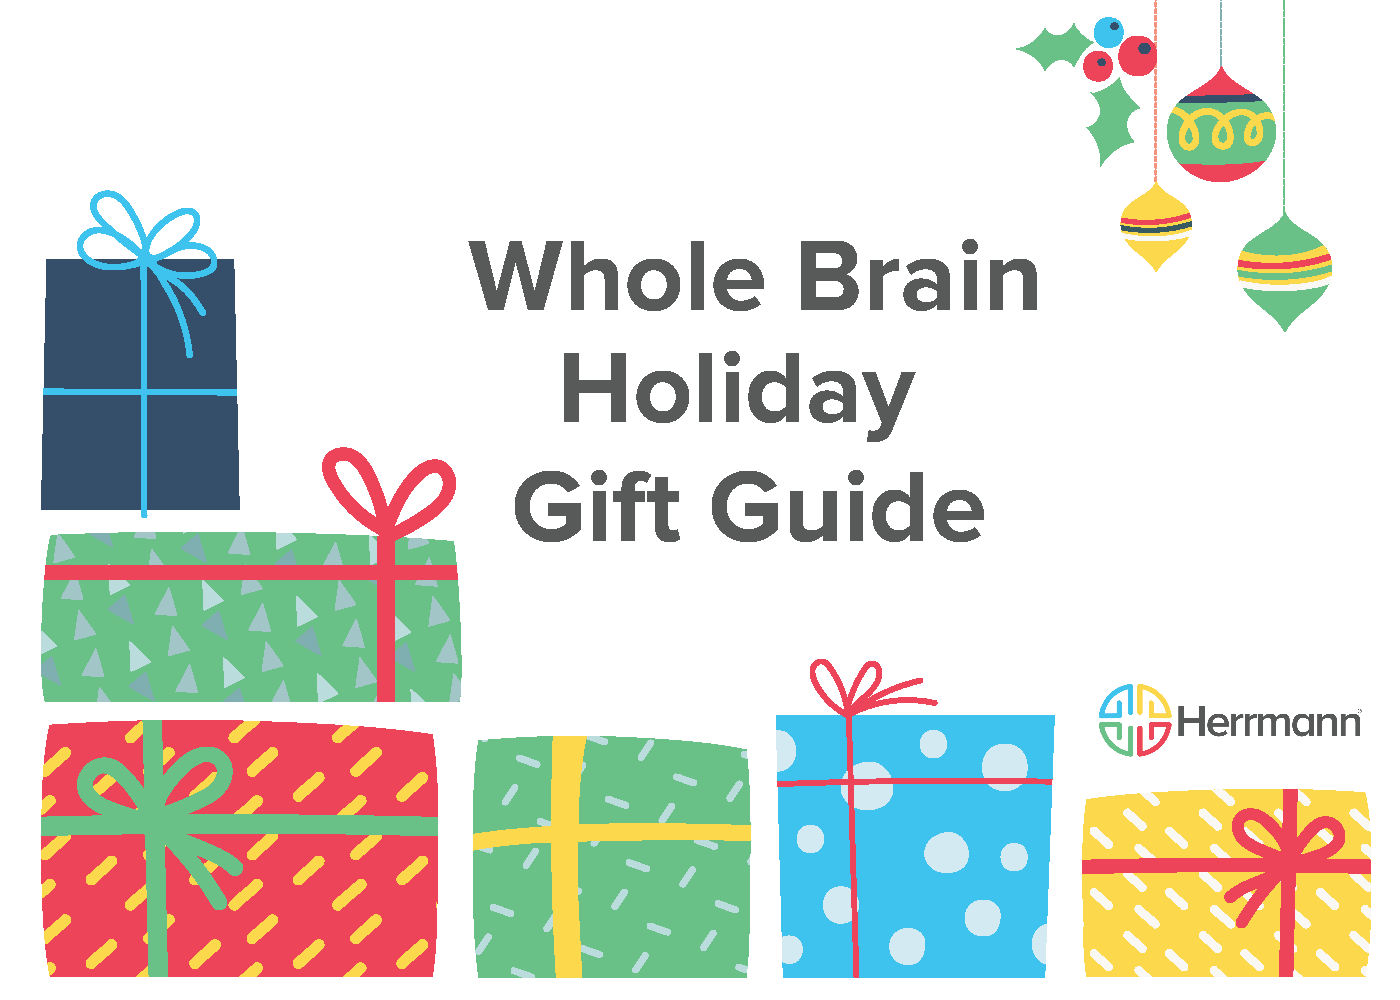 Herrmann Holiday Gift Guide